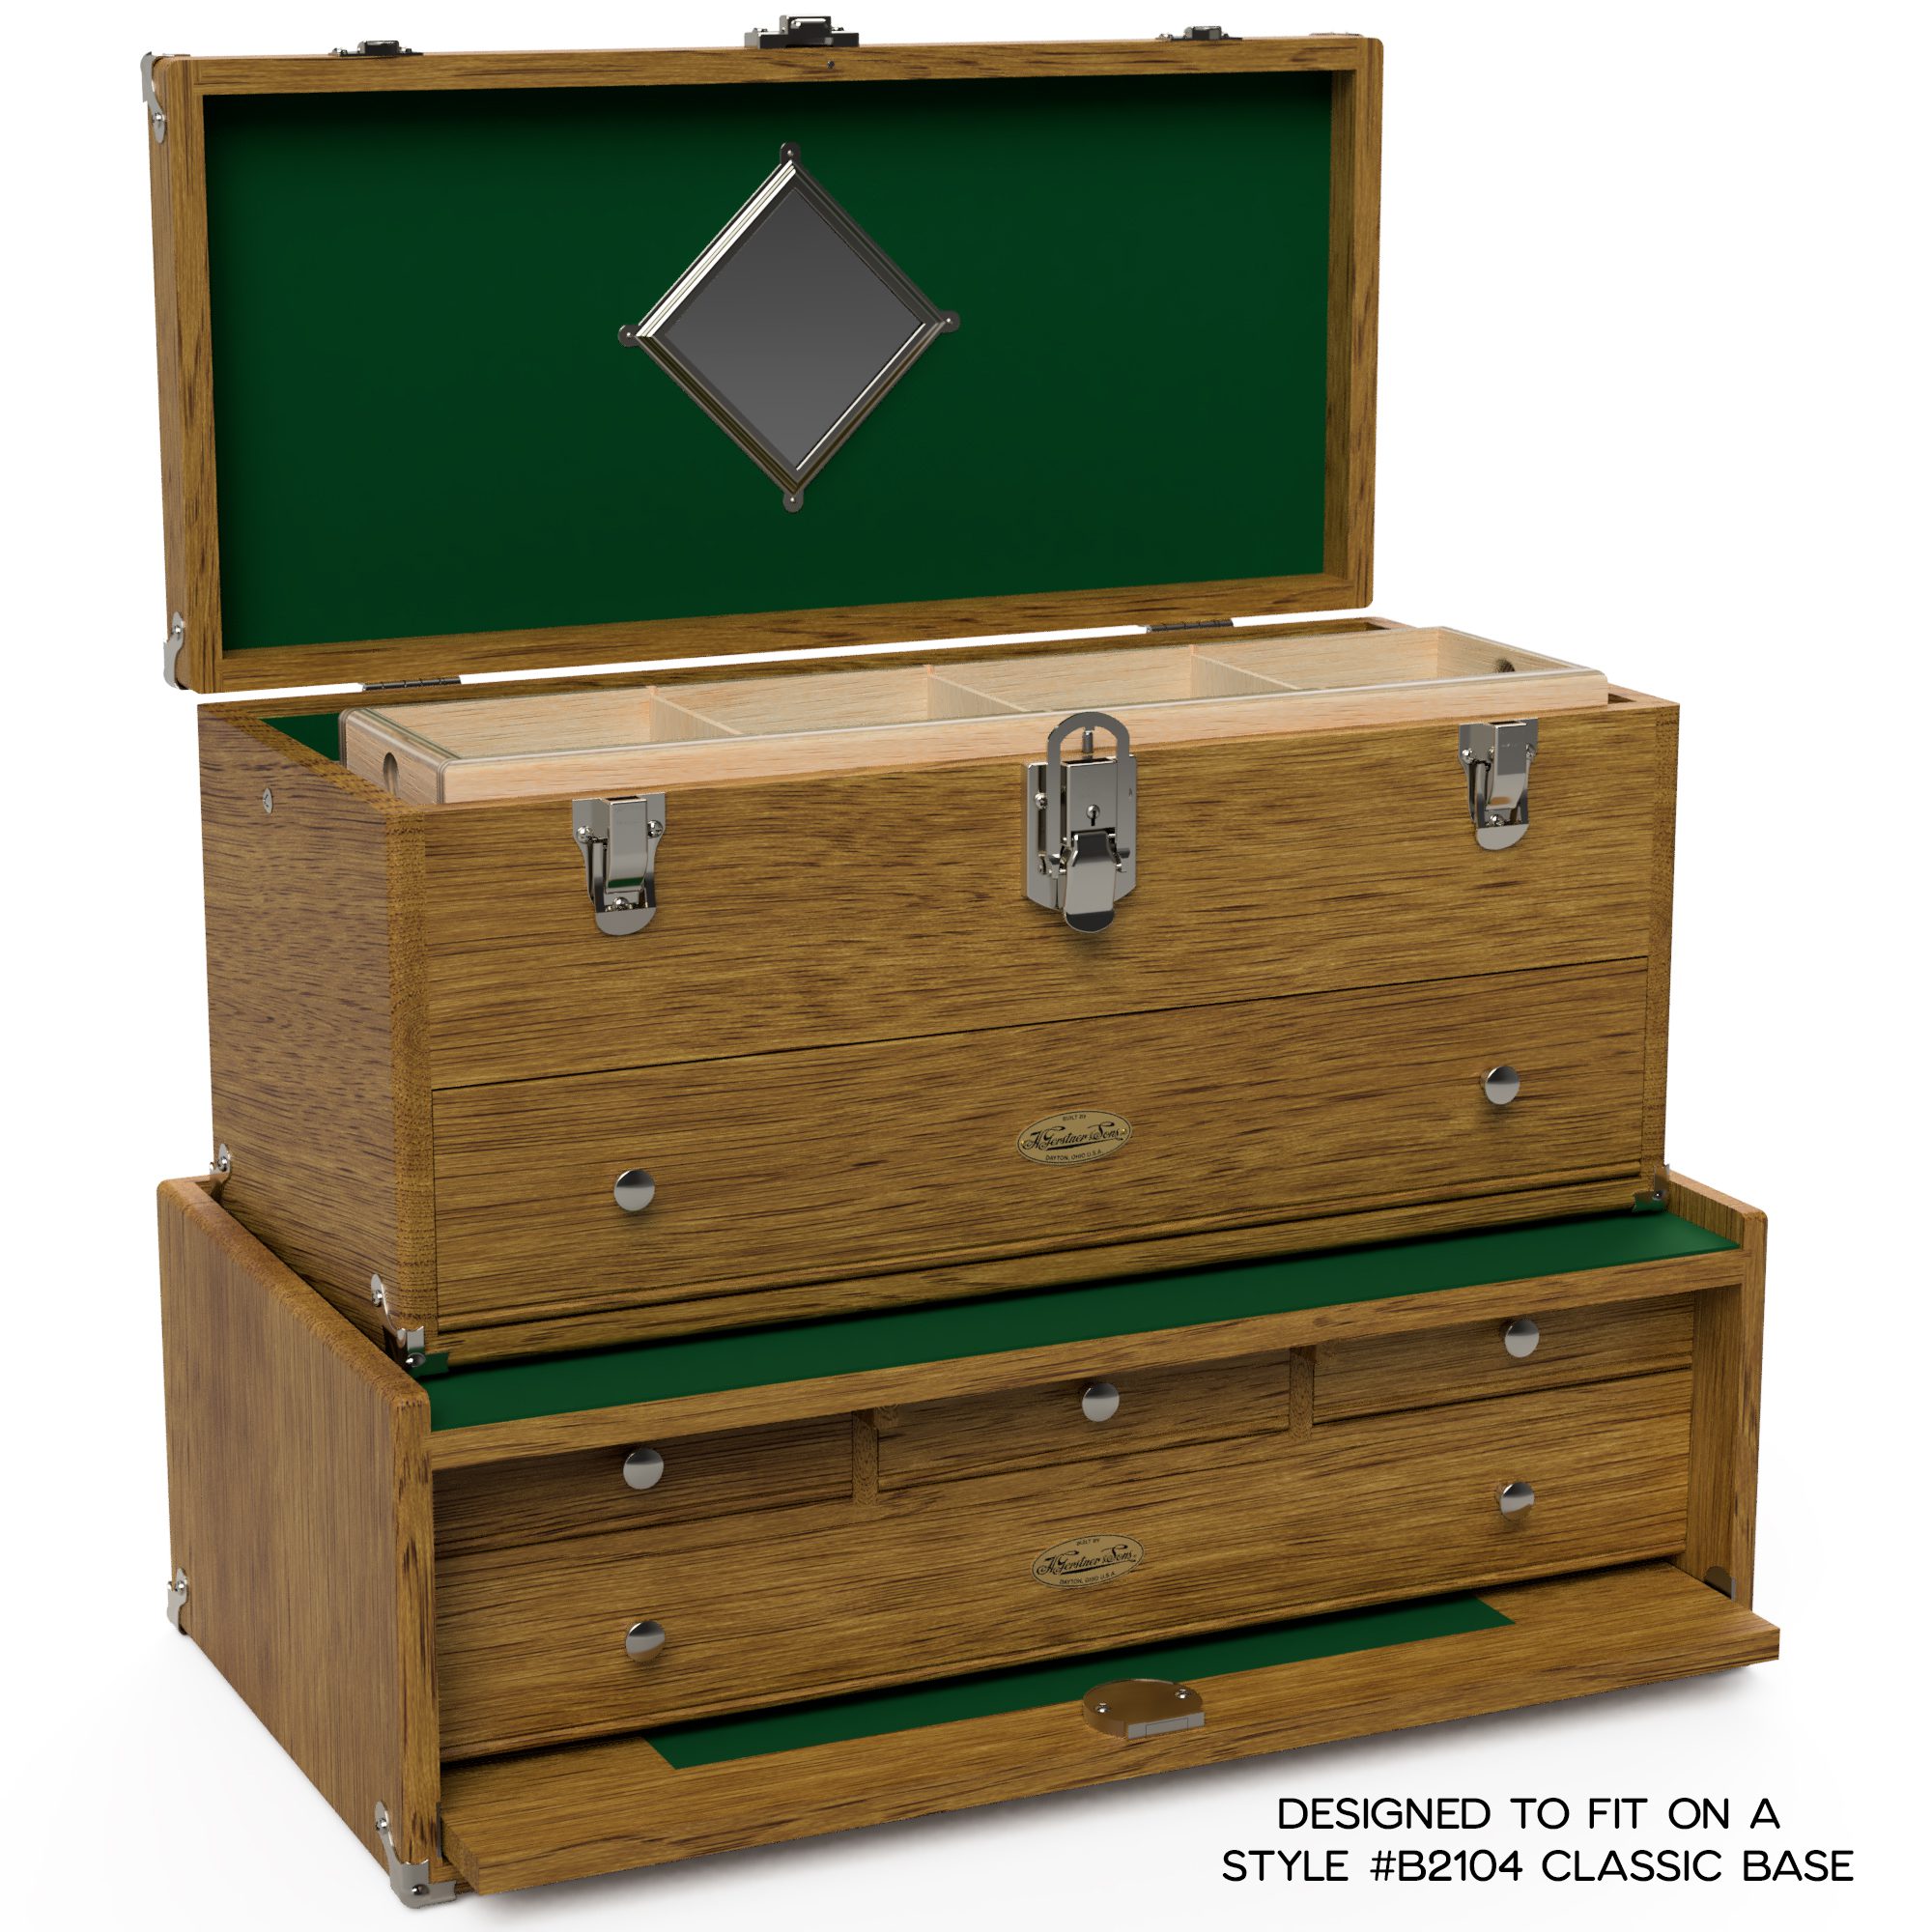 Vintage Machinist Chest, Wood Tool Box, Wood Drawer Box, Storage